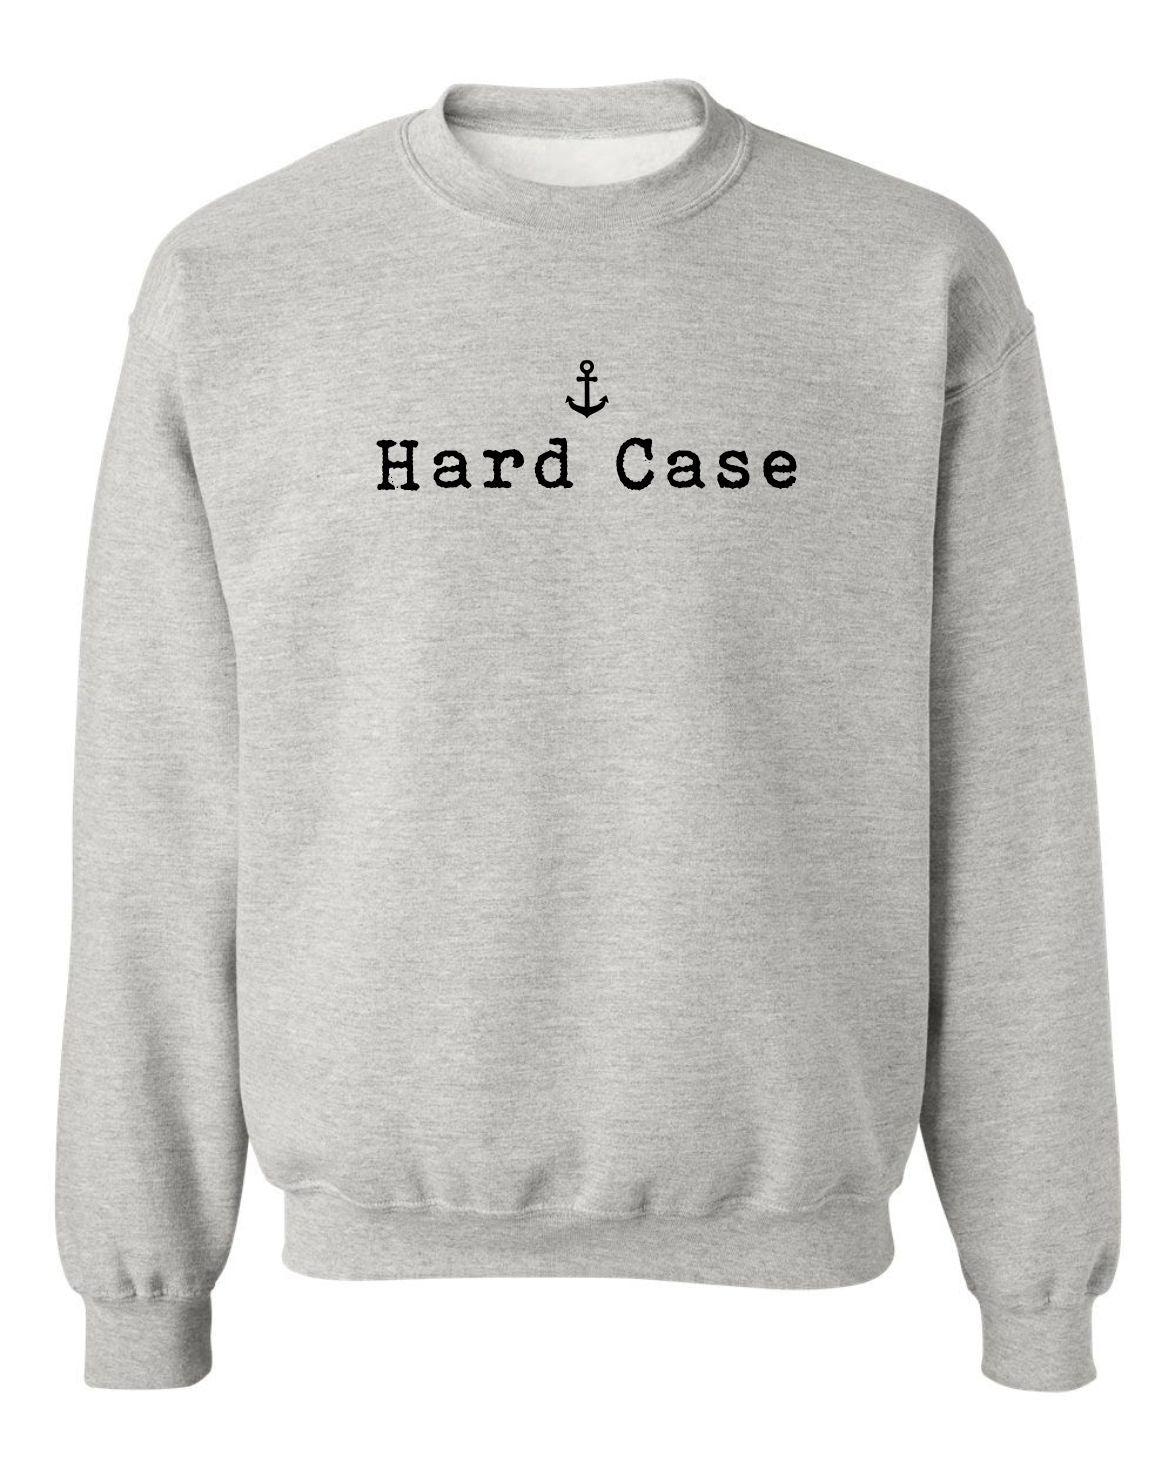 "Hard Case" Unisex Crewneck Sweatshirt